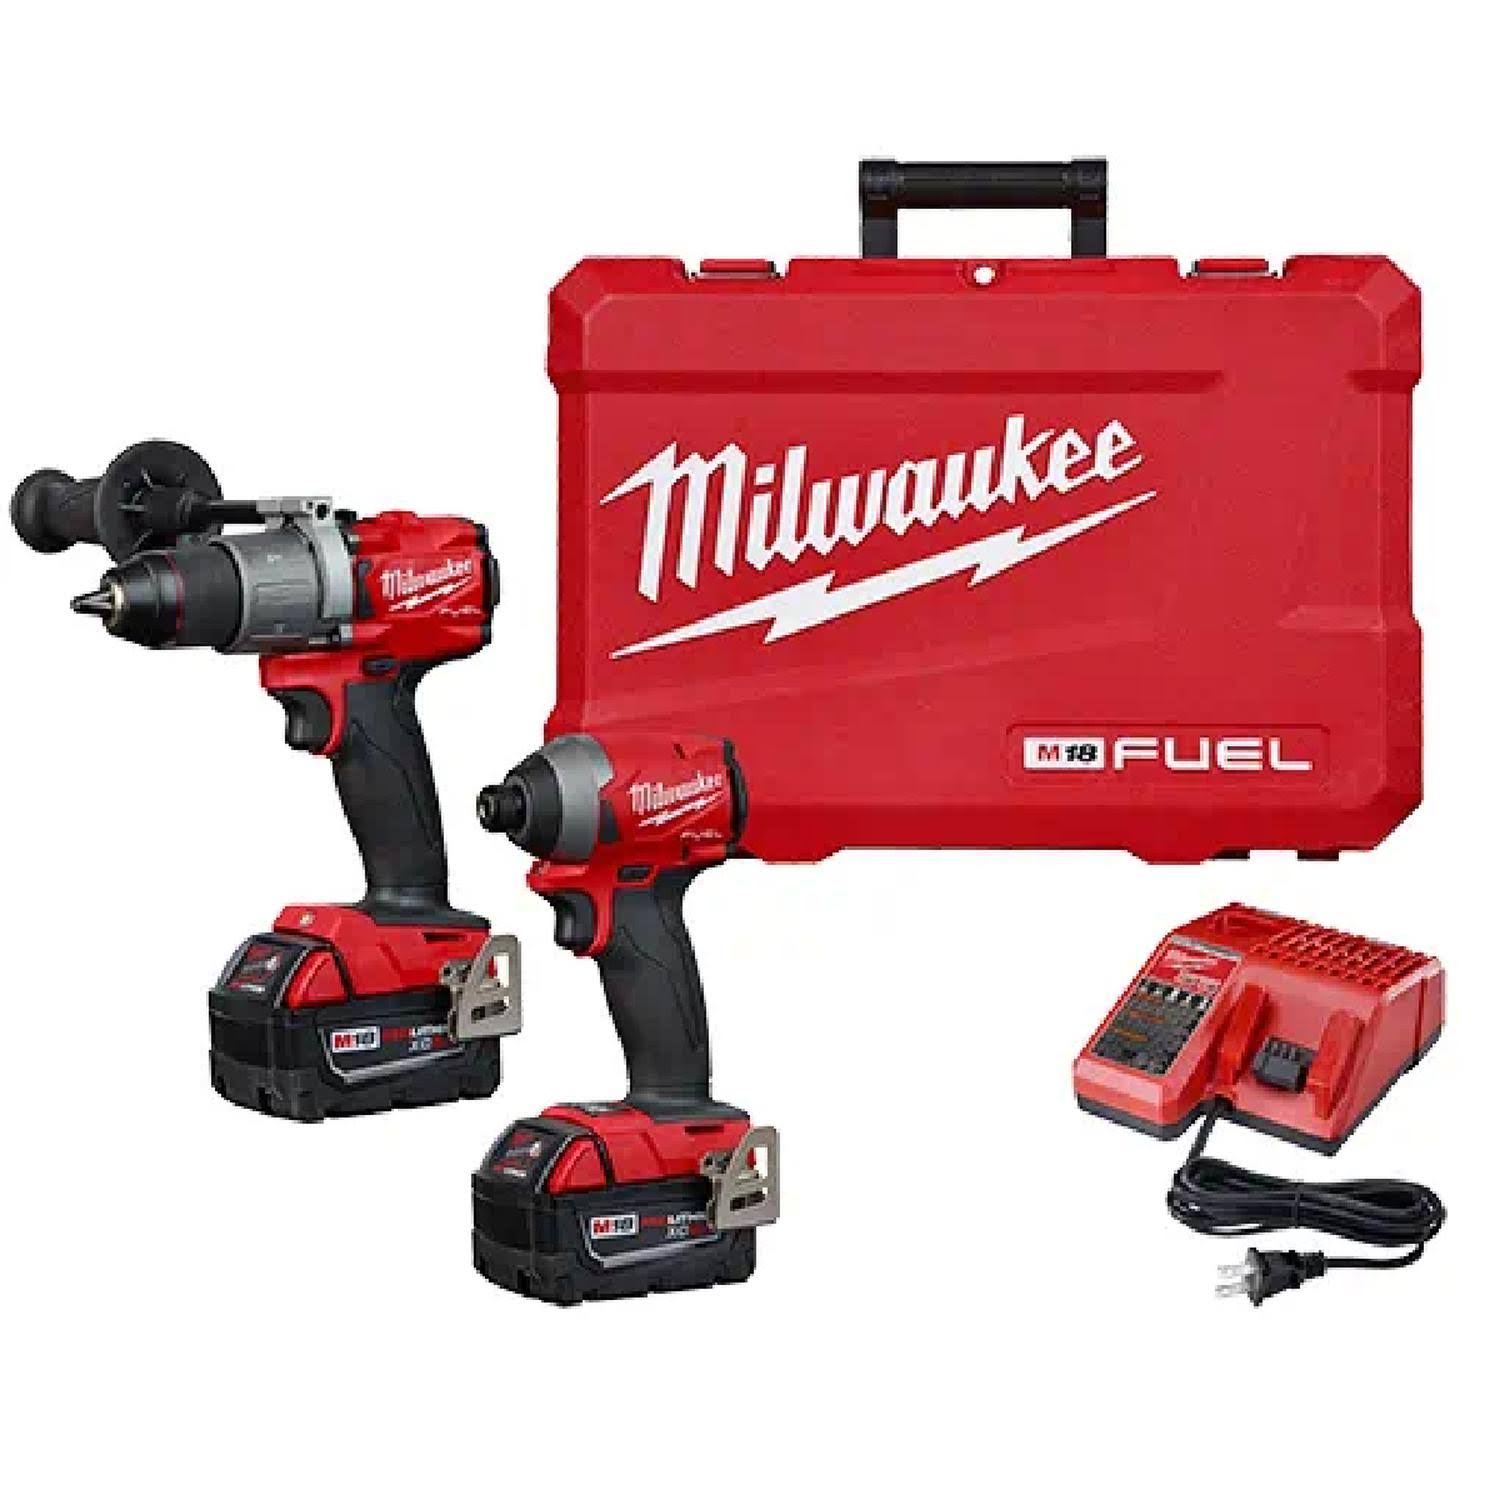 New Milwaukee 2997-22 M18 2-Tool Hammer Drill/Impact Driver Combo Kit